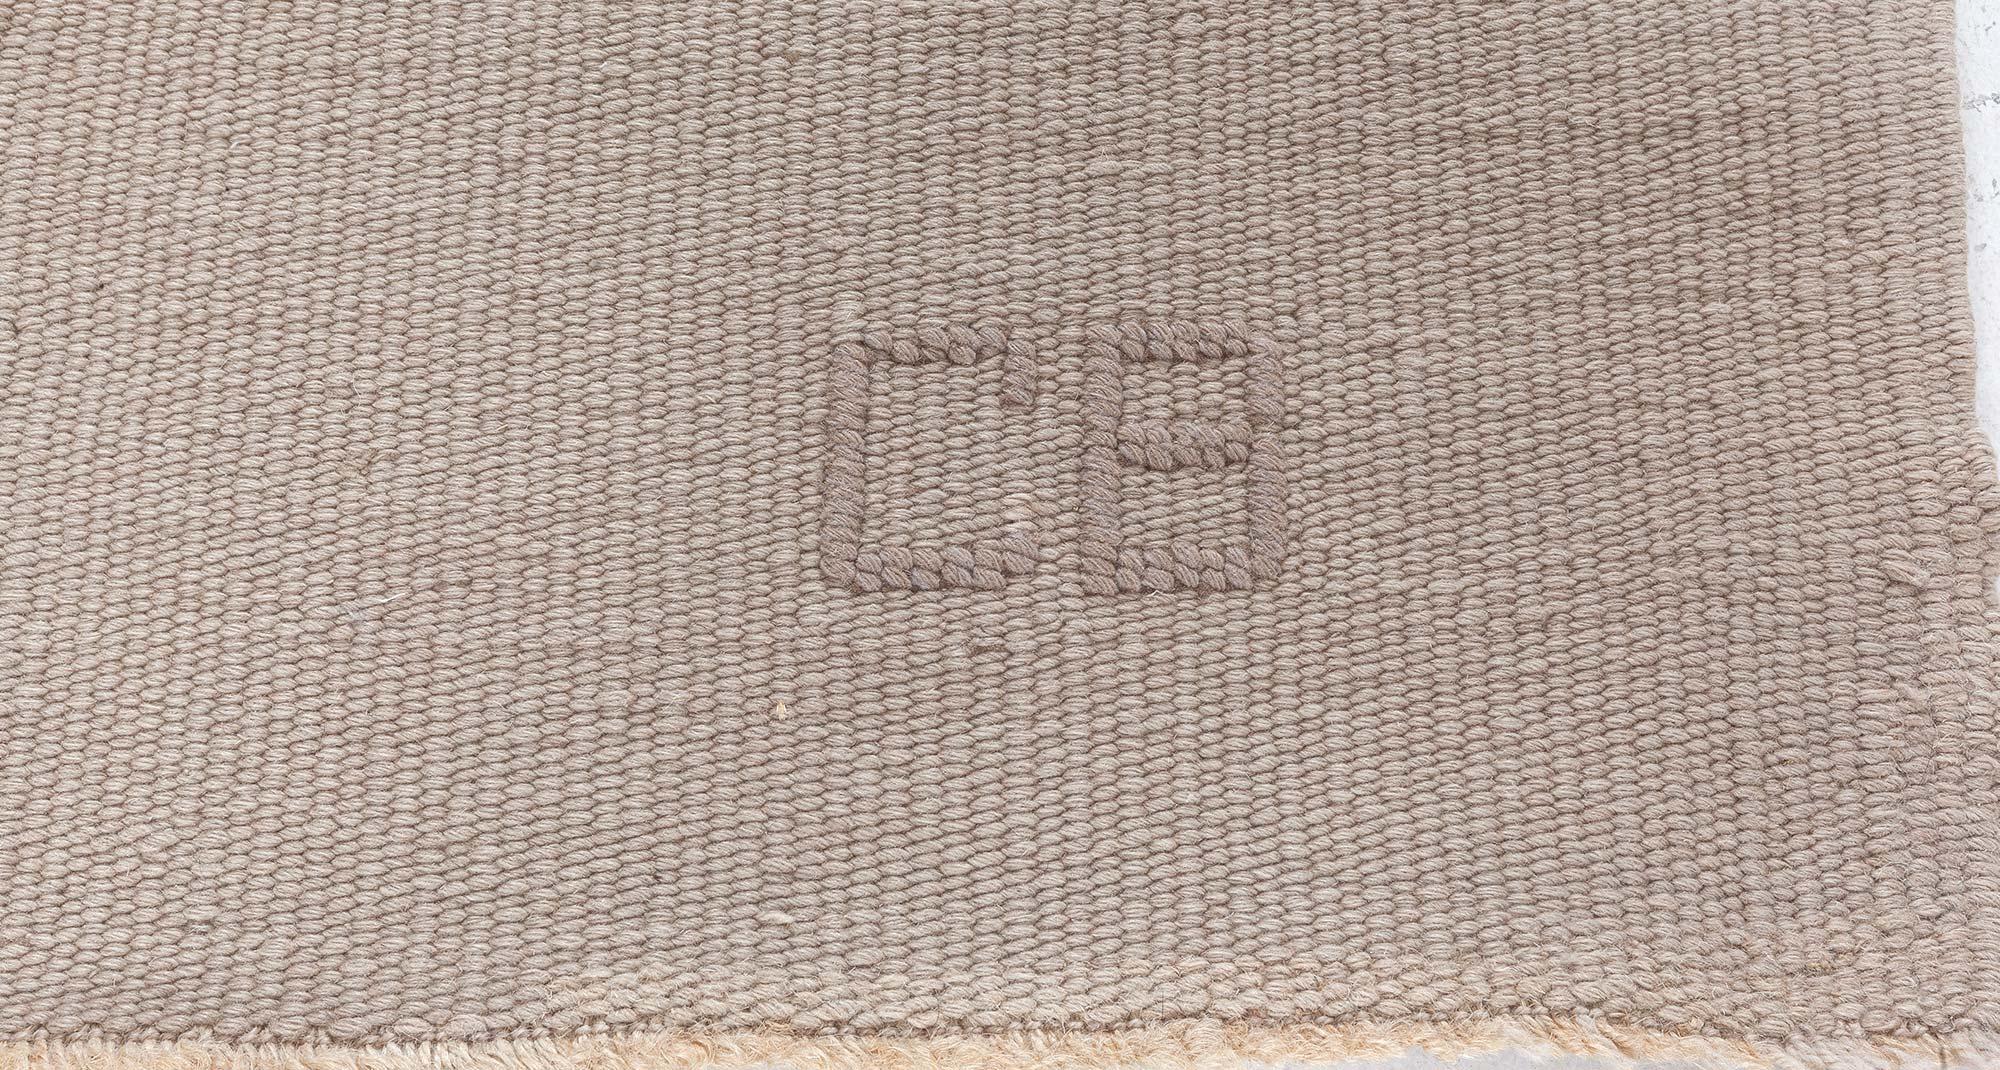 Vintage Scandinavian Beige Handmade Wool rug
Size: 6'2